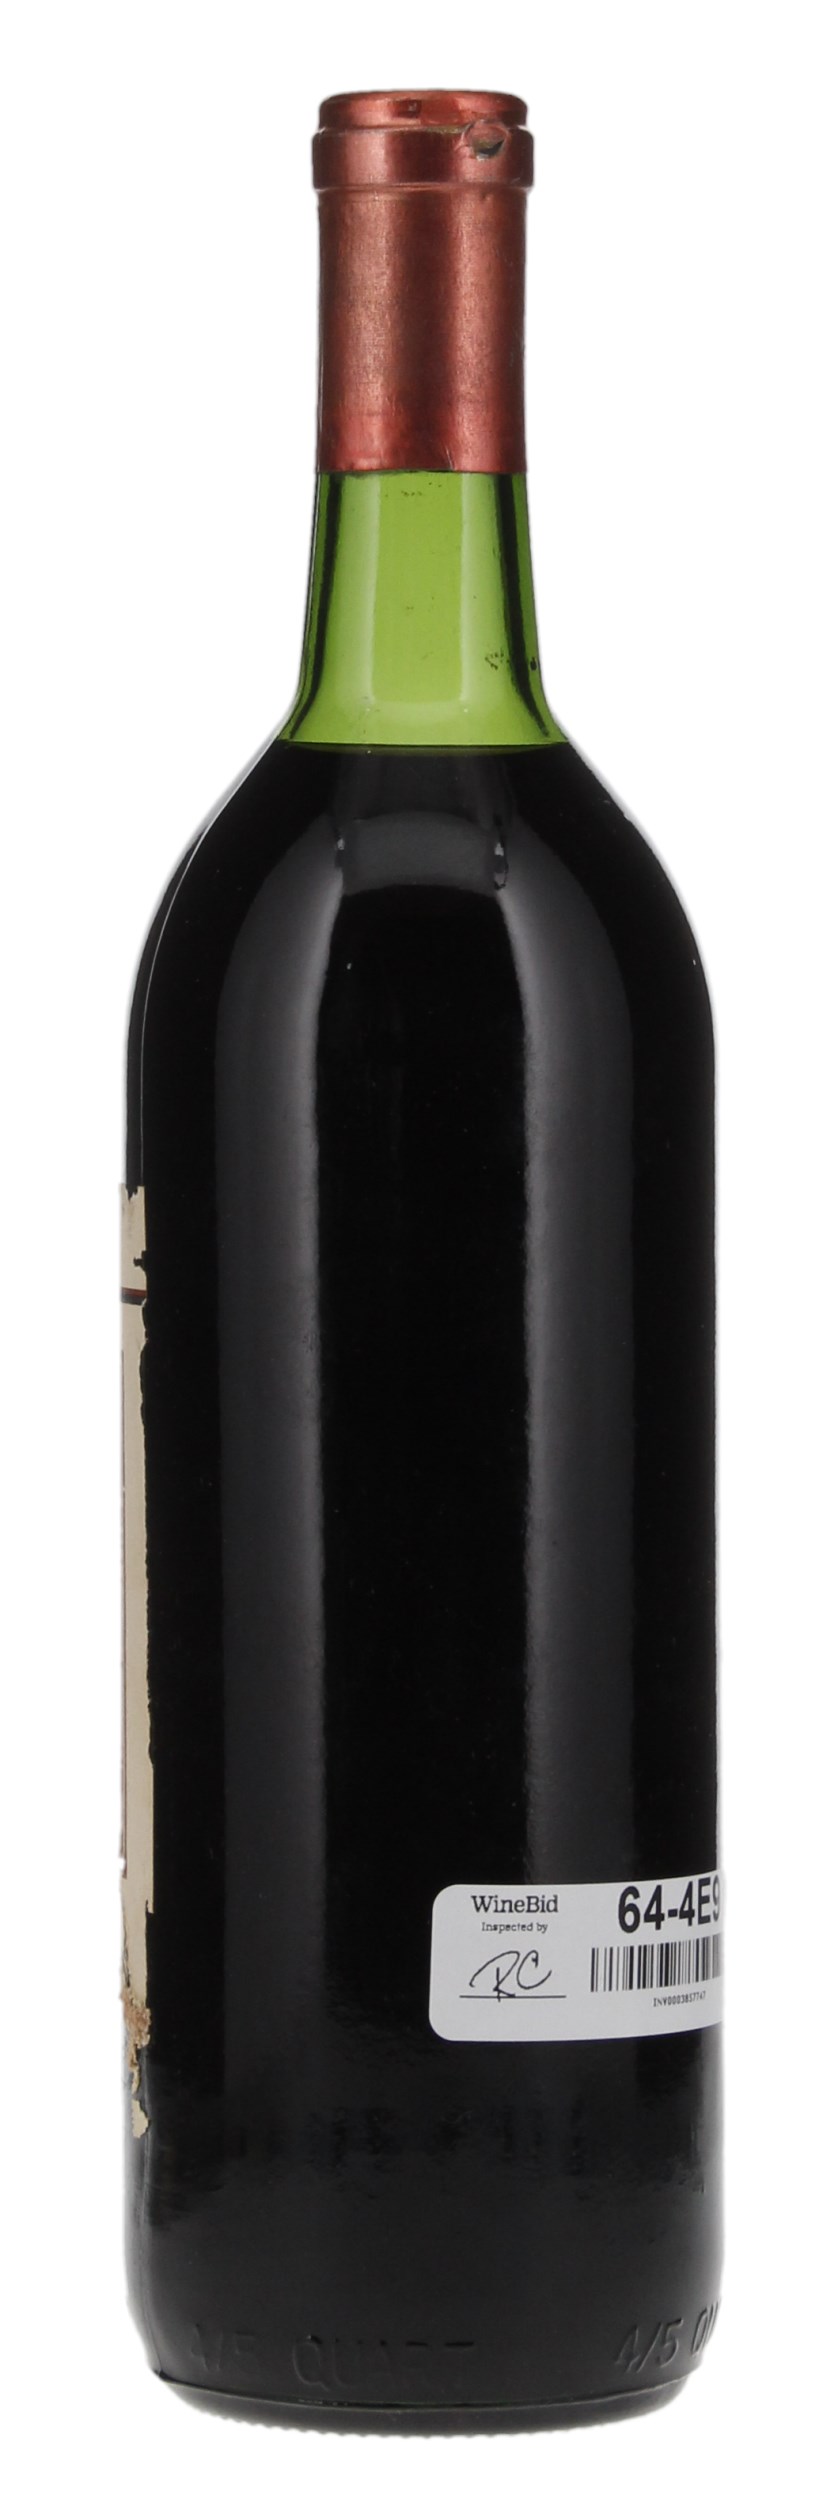 1970 Heitz Martha's Vineyard Cabernet Sauvignon, 750ml